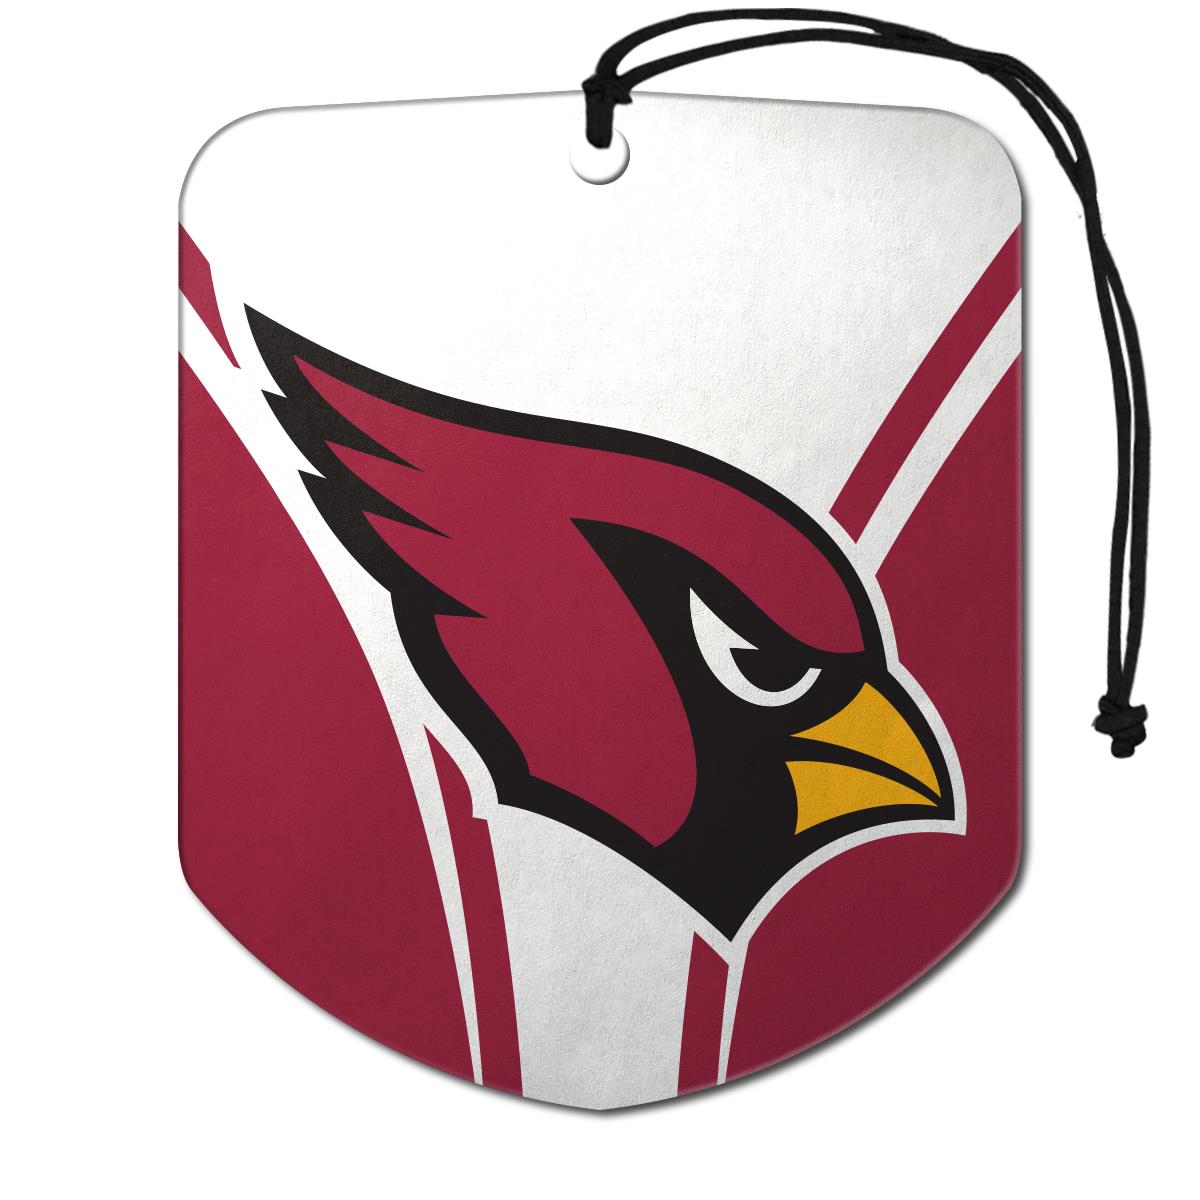 Picture of Arizona Cardinals Air Freshener Shield Design 2 Pack